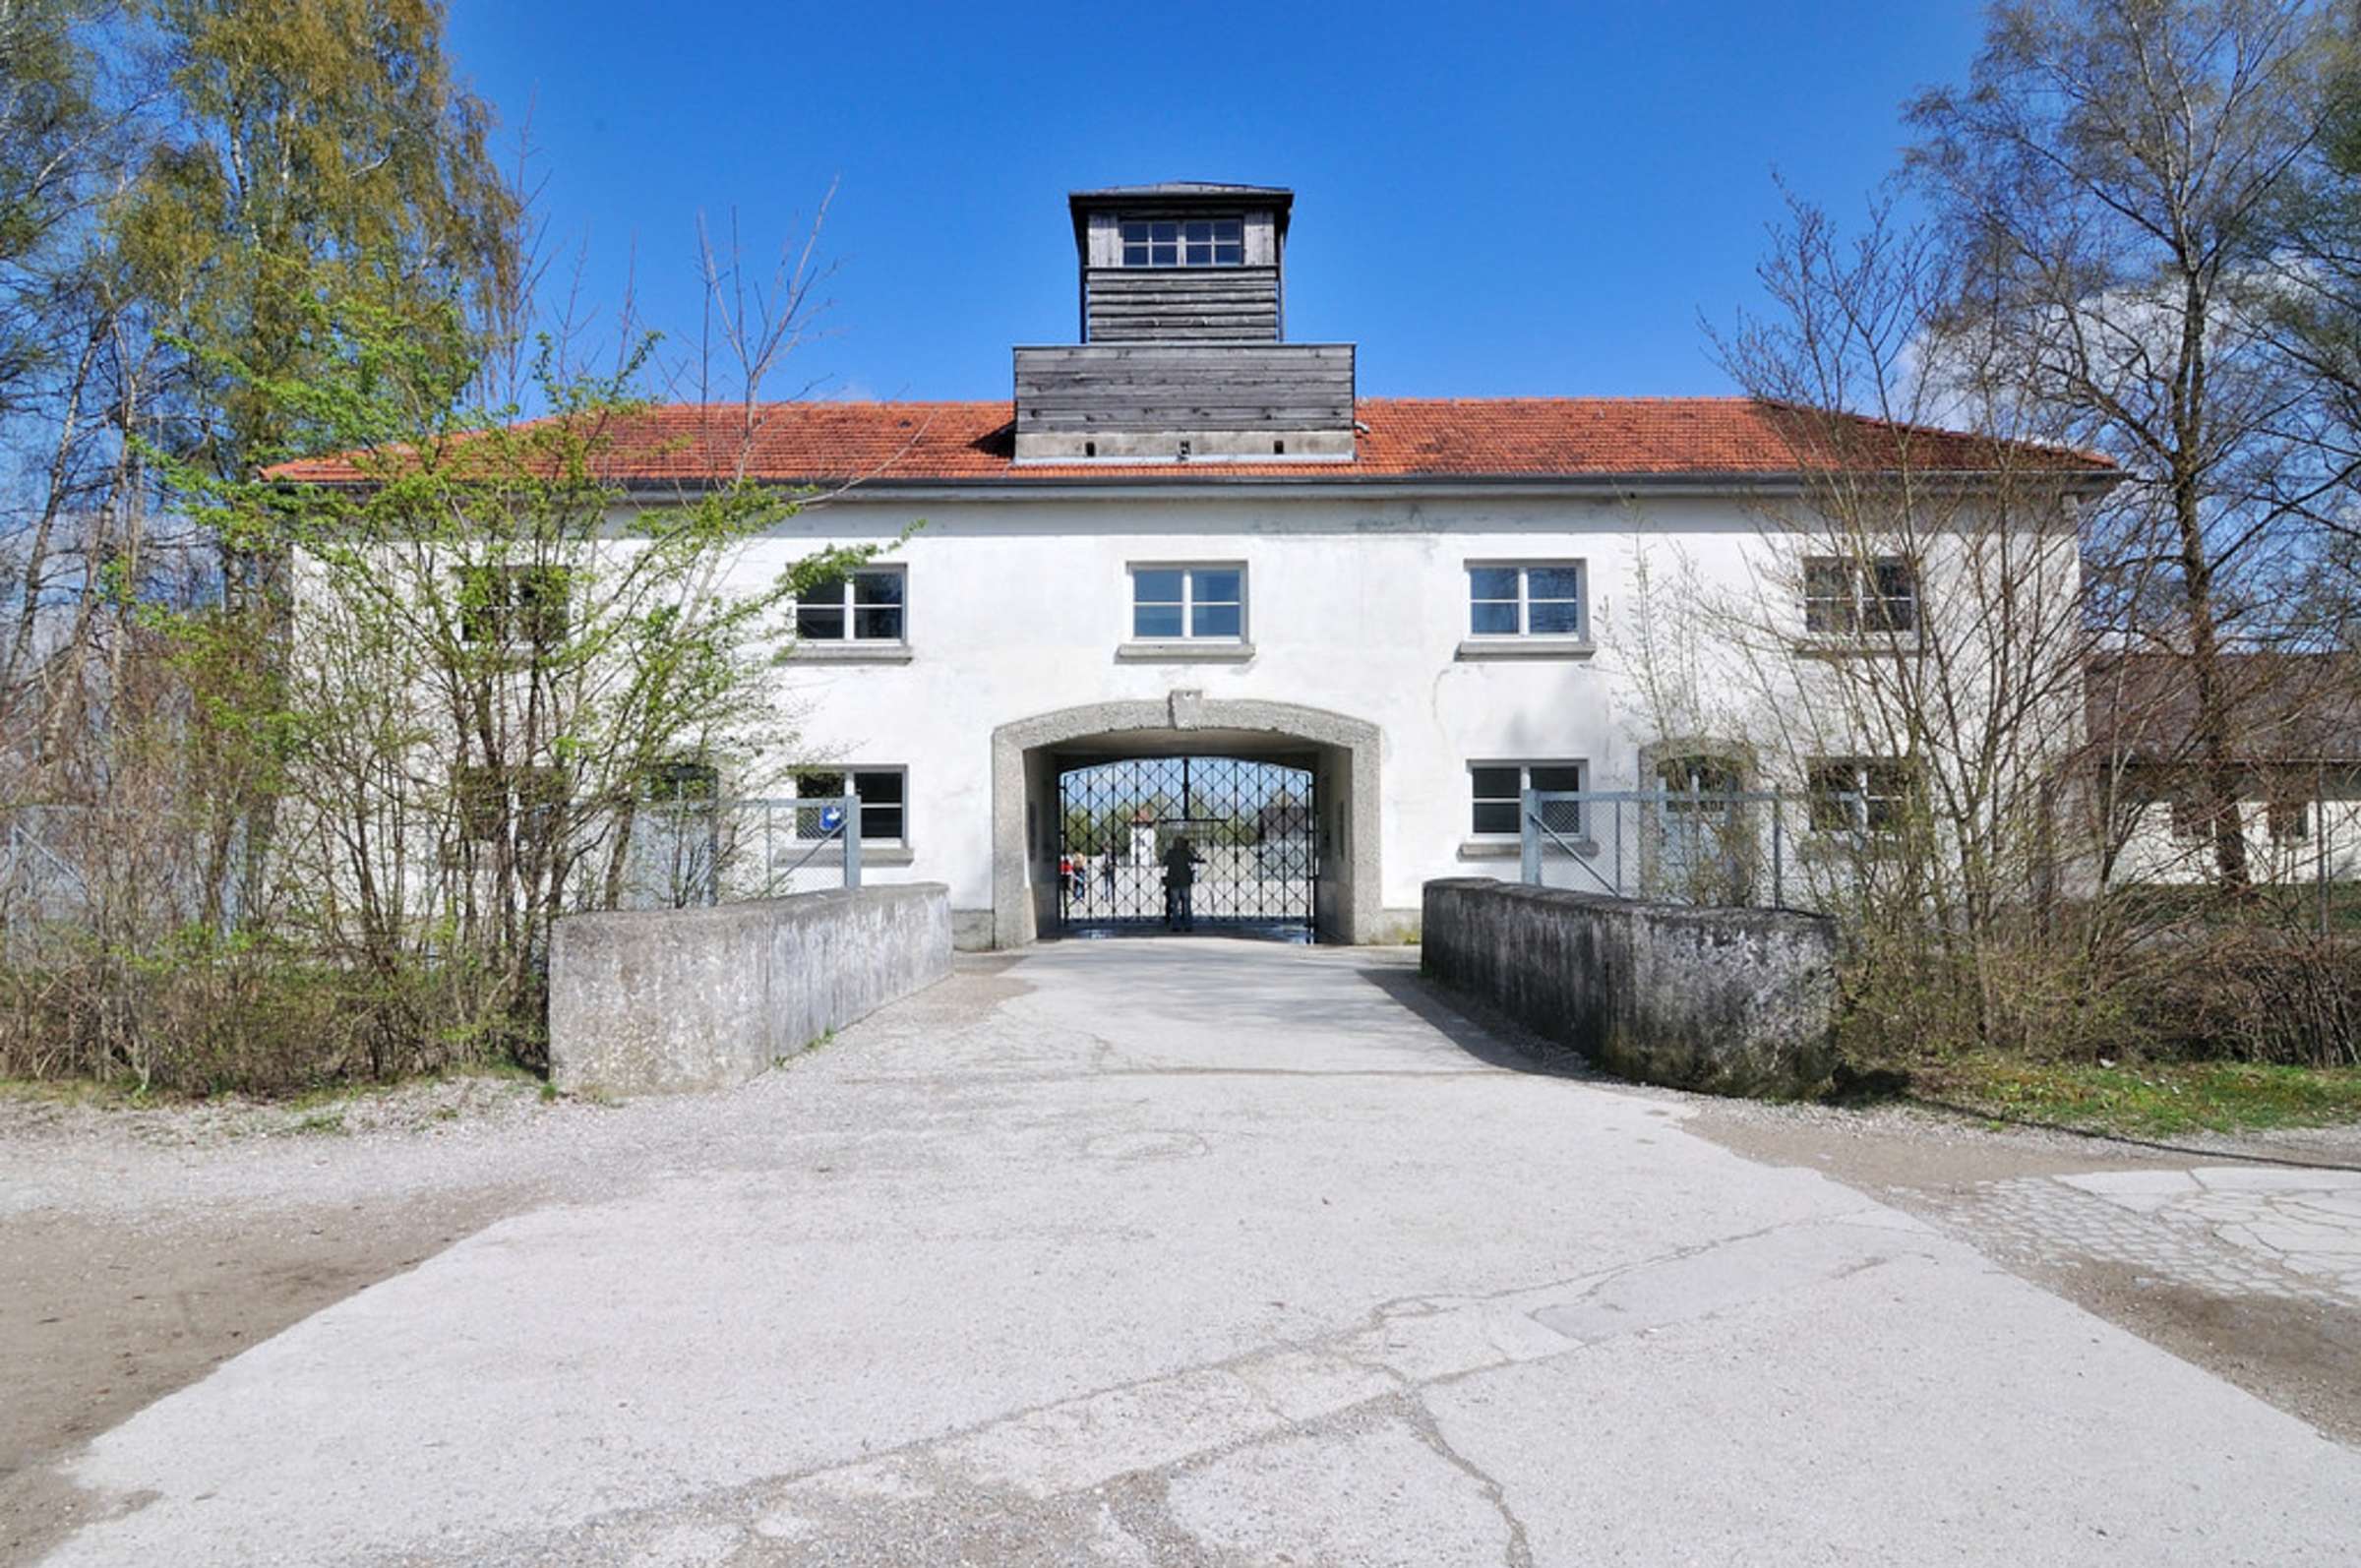 visit the dachau concentration camp memorial site